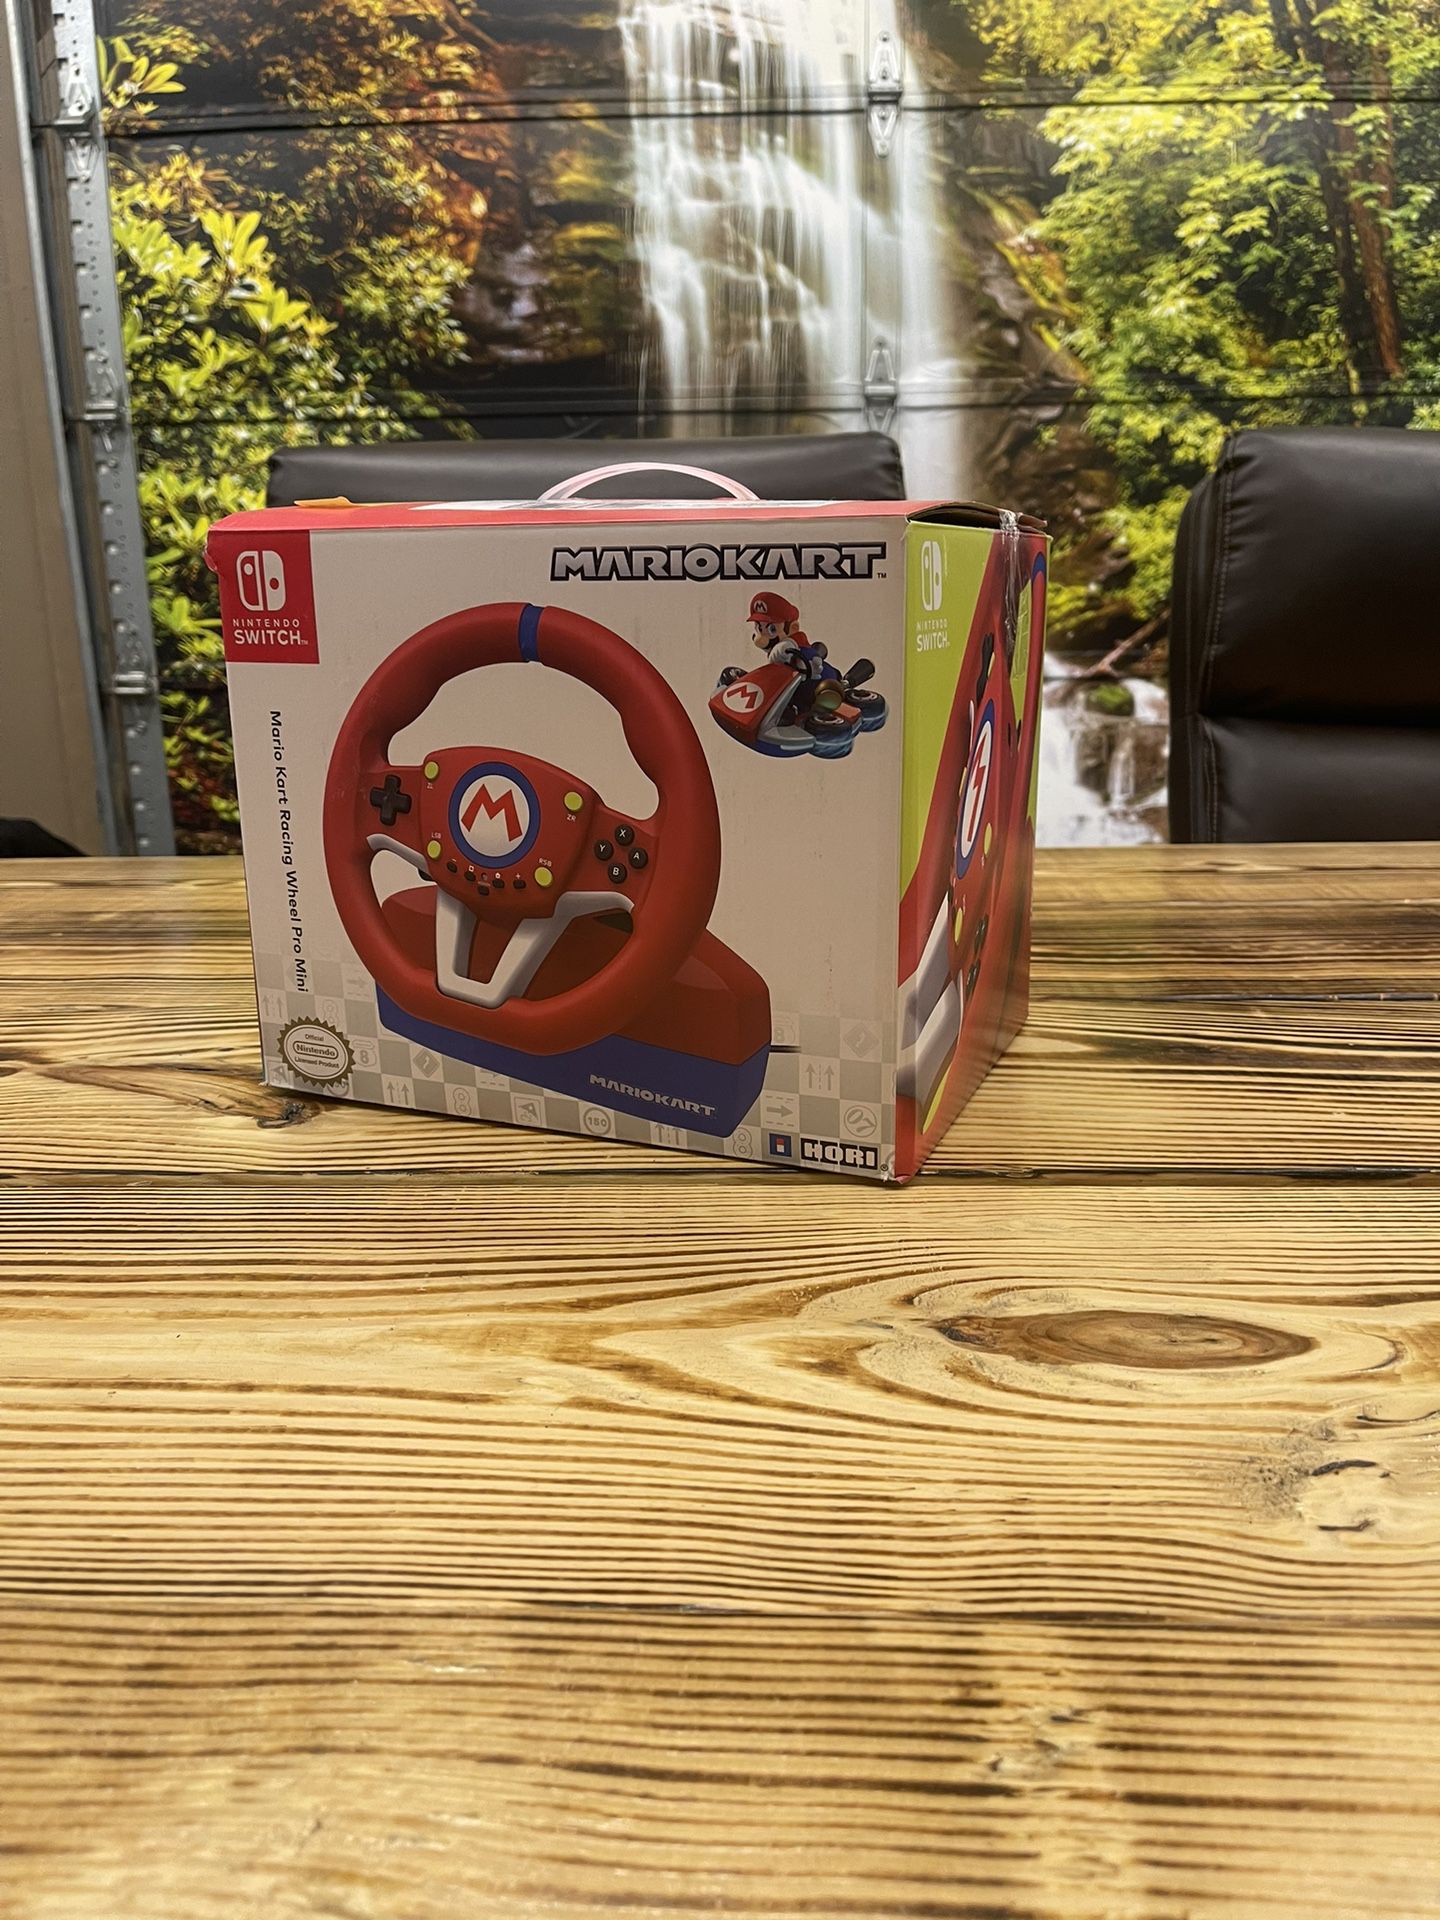 Hori Mariokart Racing Wheel For Nintendo Switch